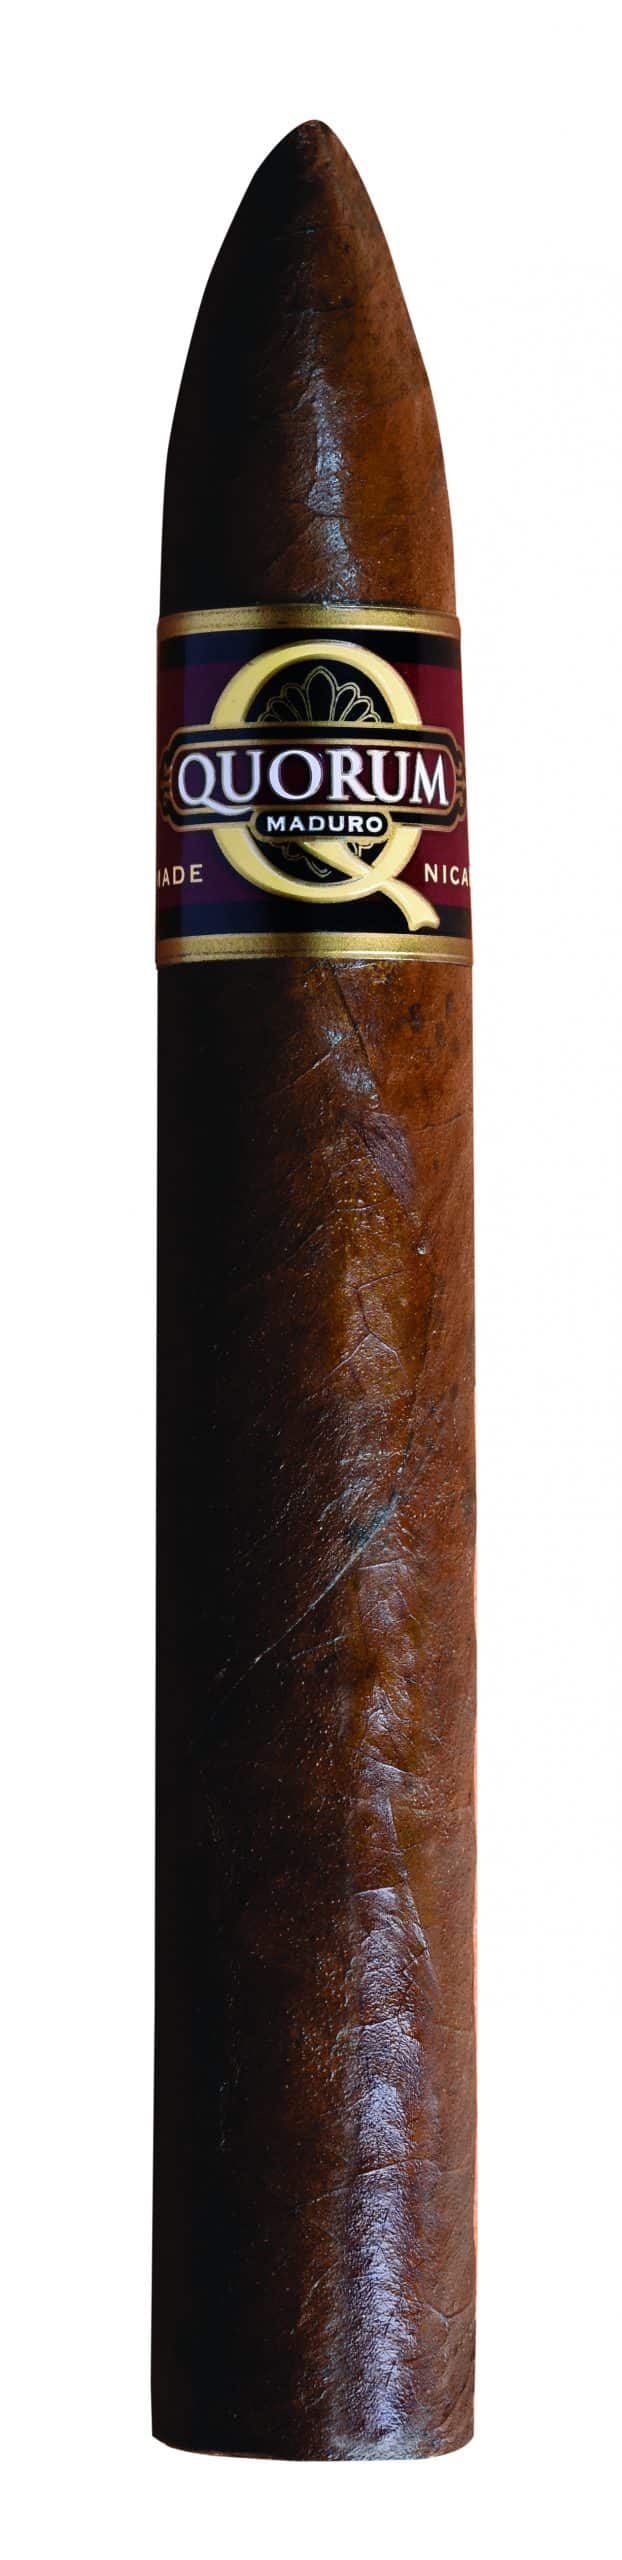 Single Quorum Maduro Torpedo cigar